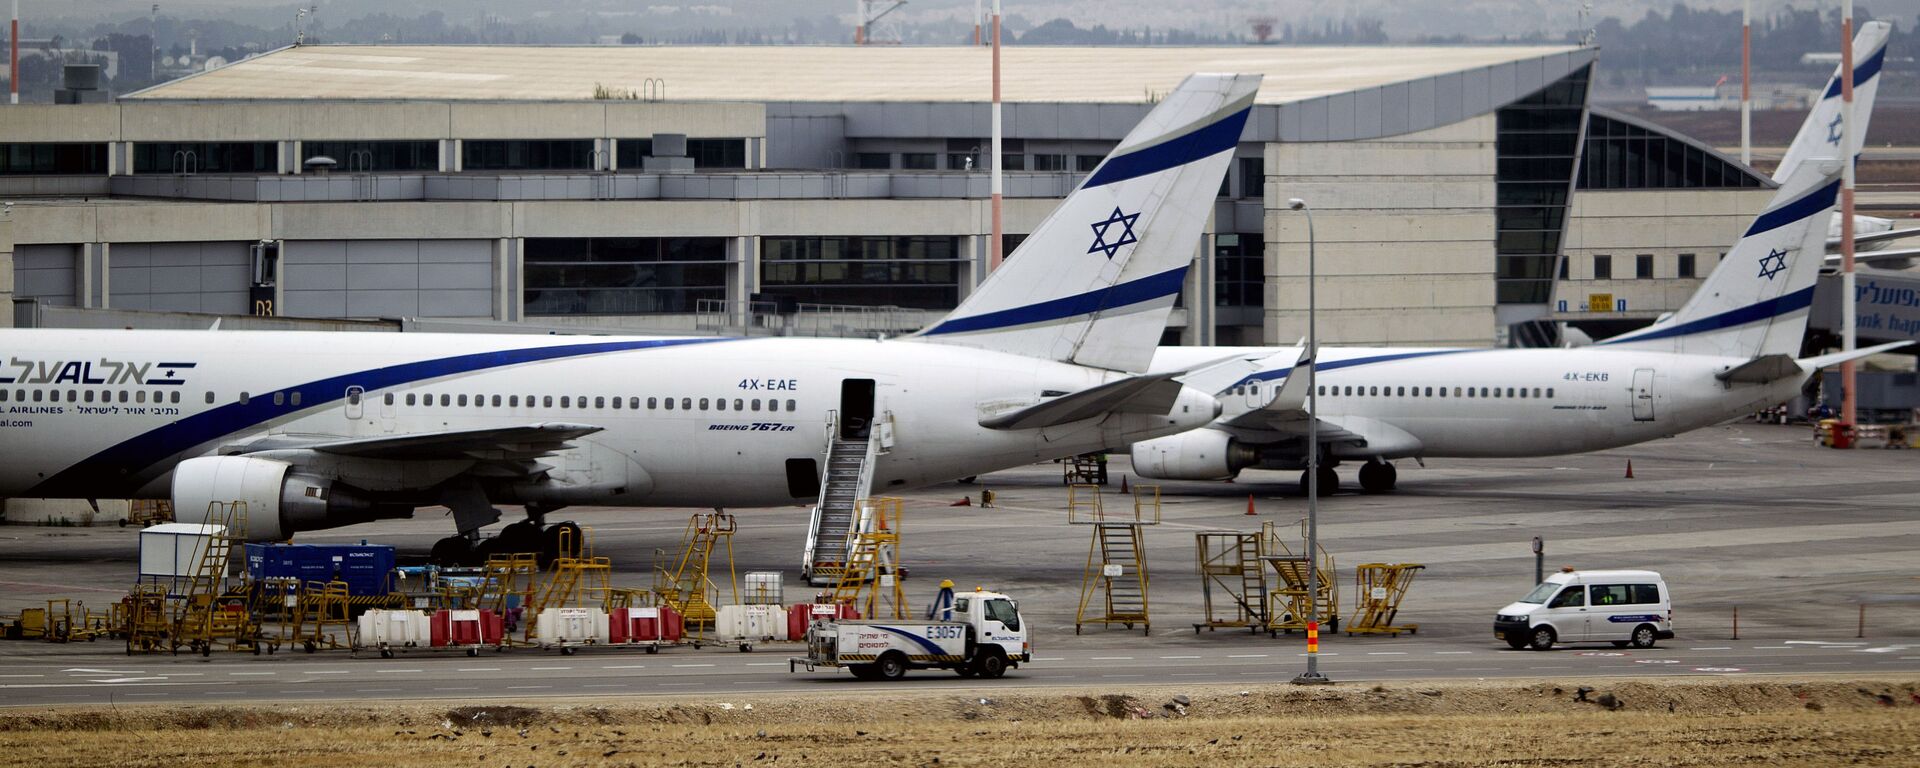 مطار بن غوريون الدولي في تل أبيب، إسرائيل 21 أبريل/ نيسان 2013 - سبوتنيك عربي, 1920, 20.05.2023